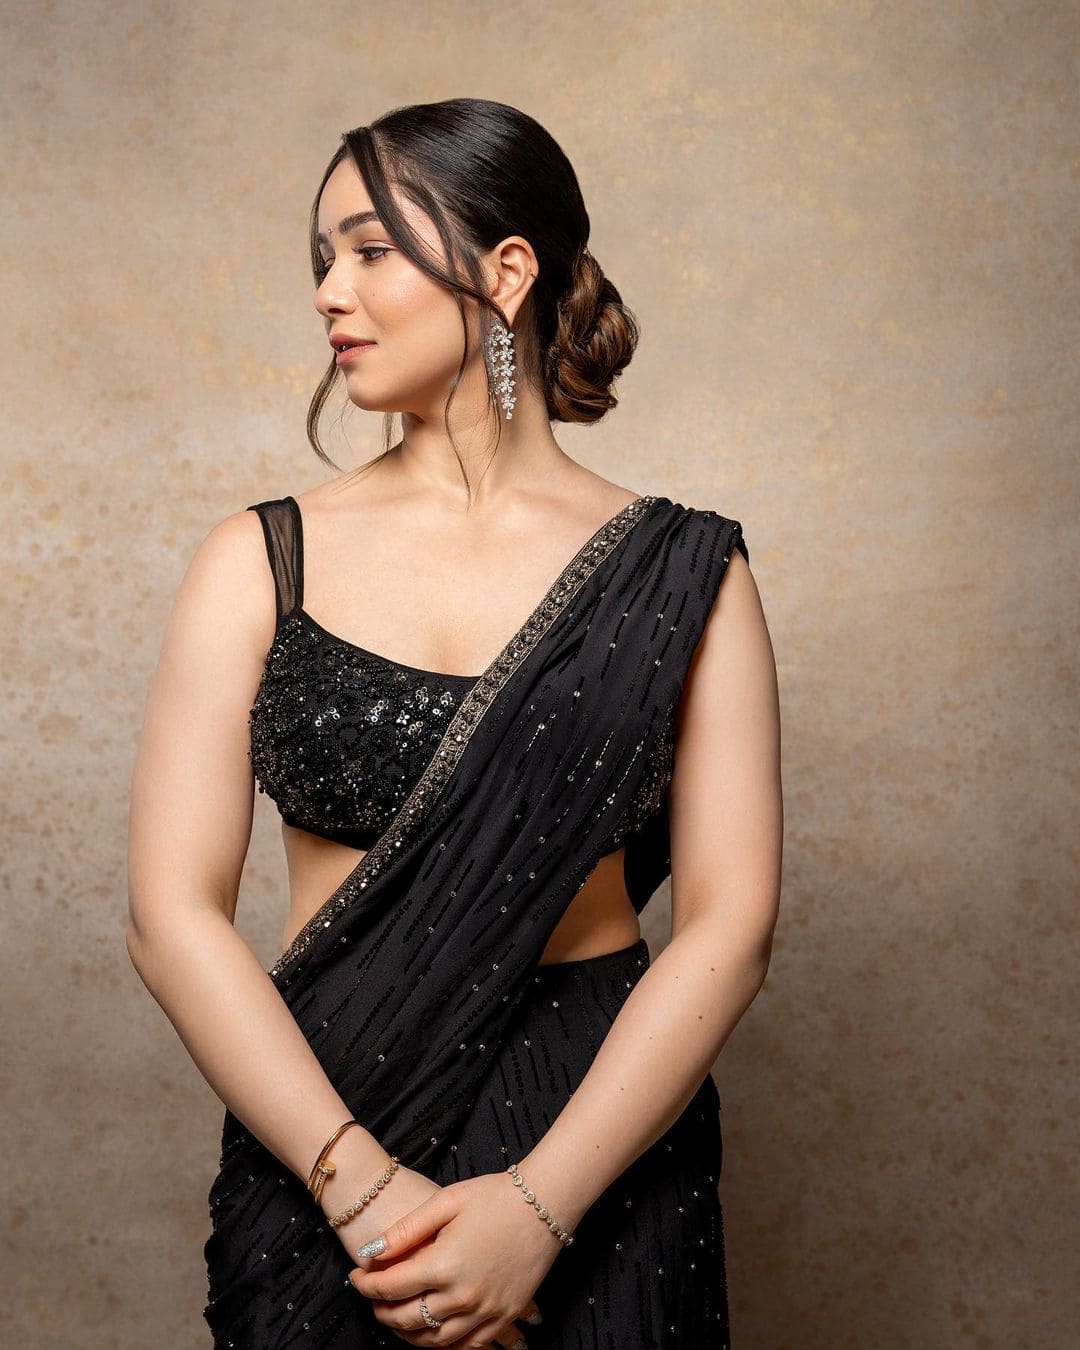 4. Black Sari Elegance: Sara's Stunning Look